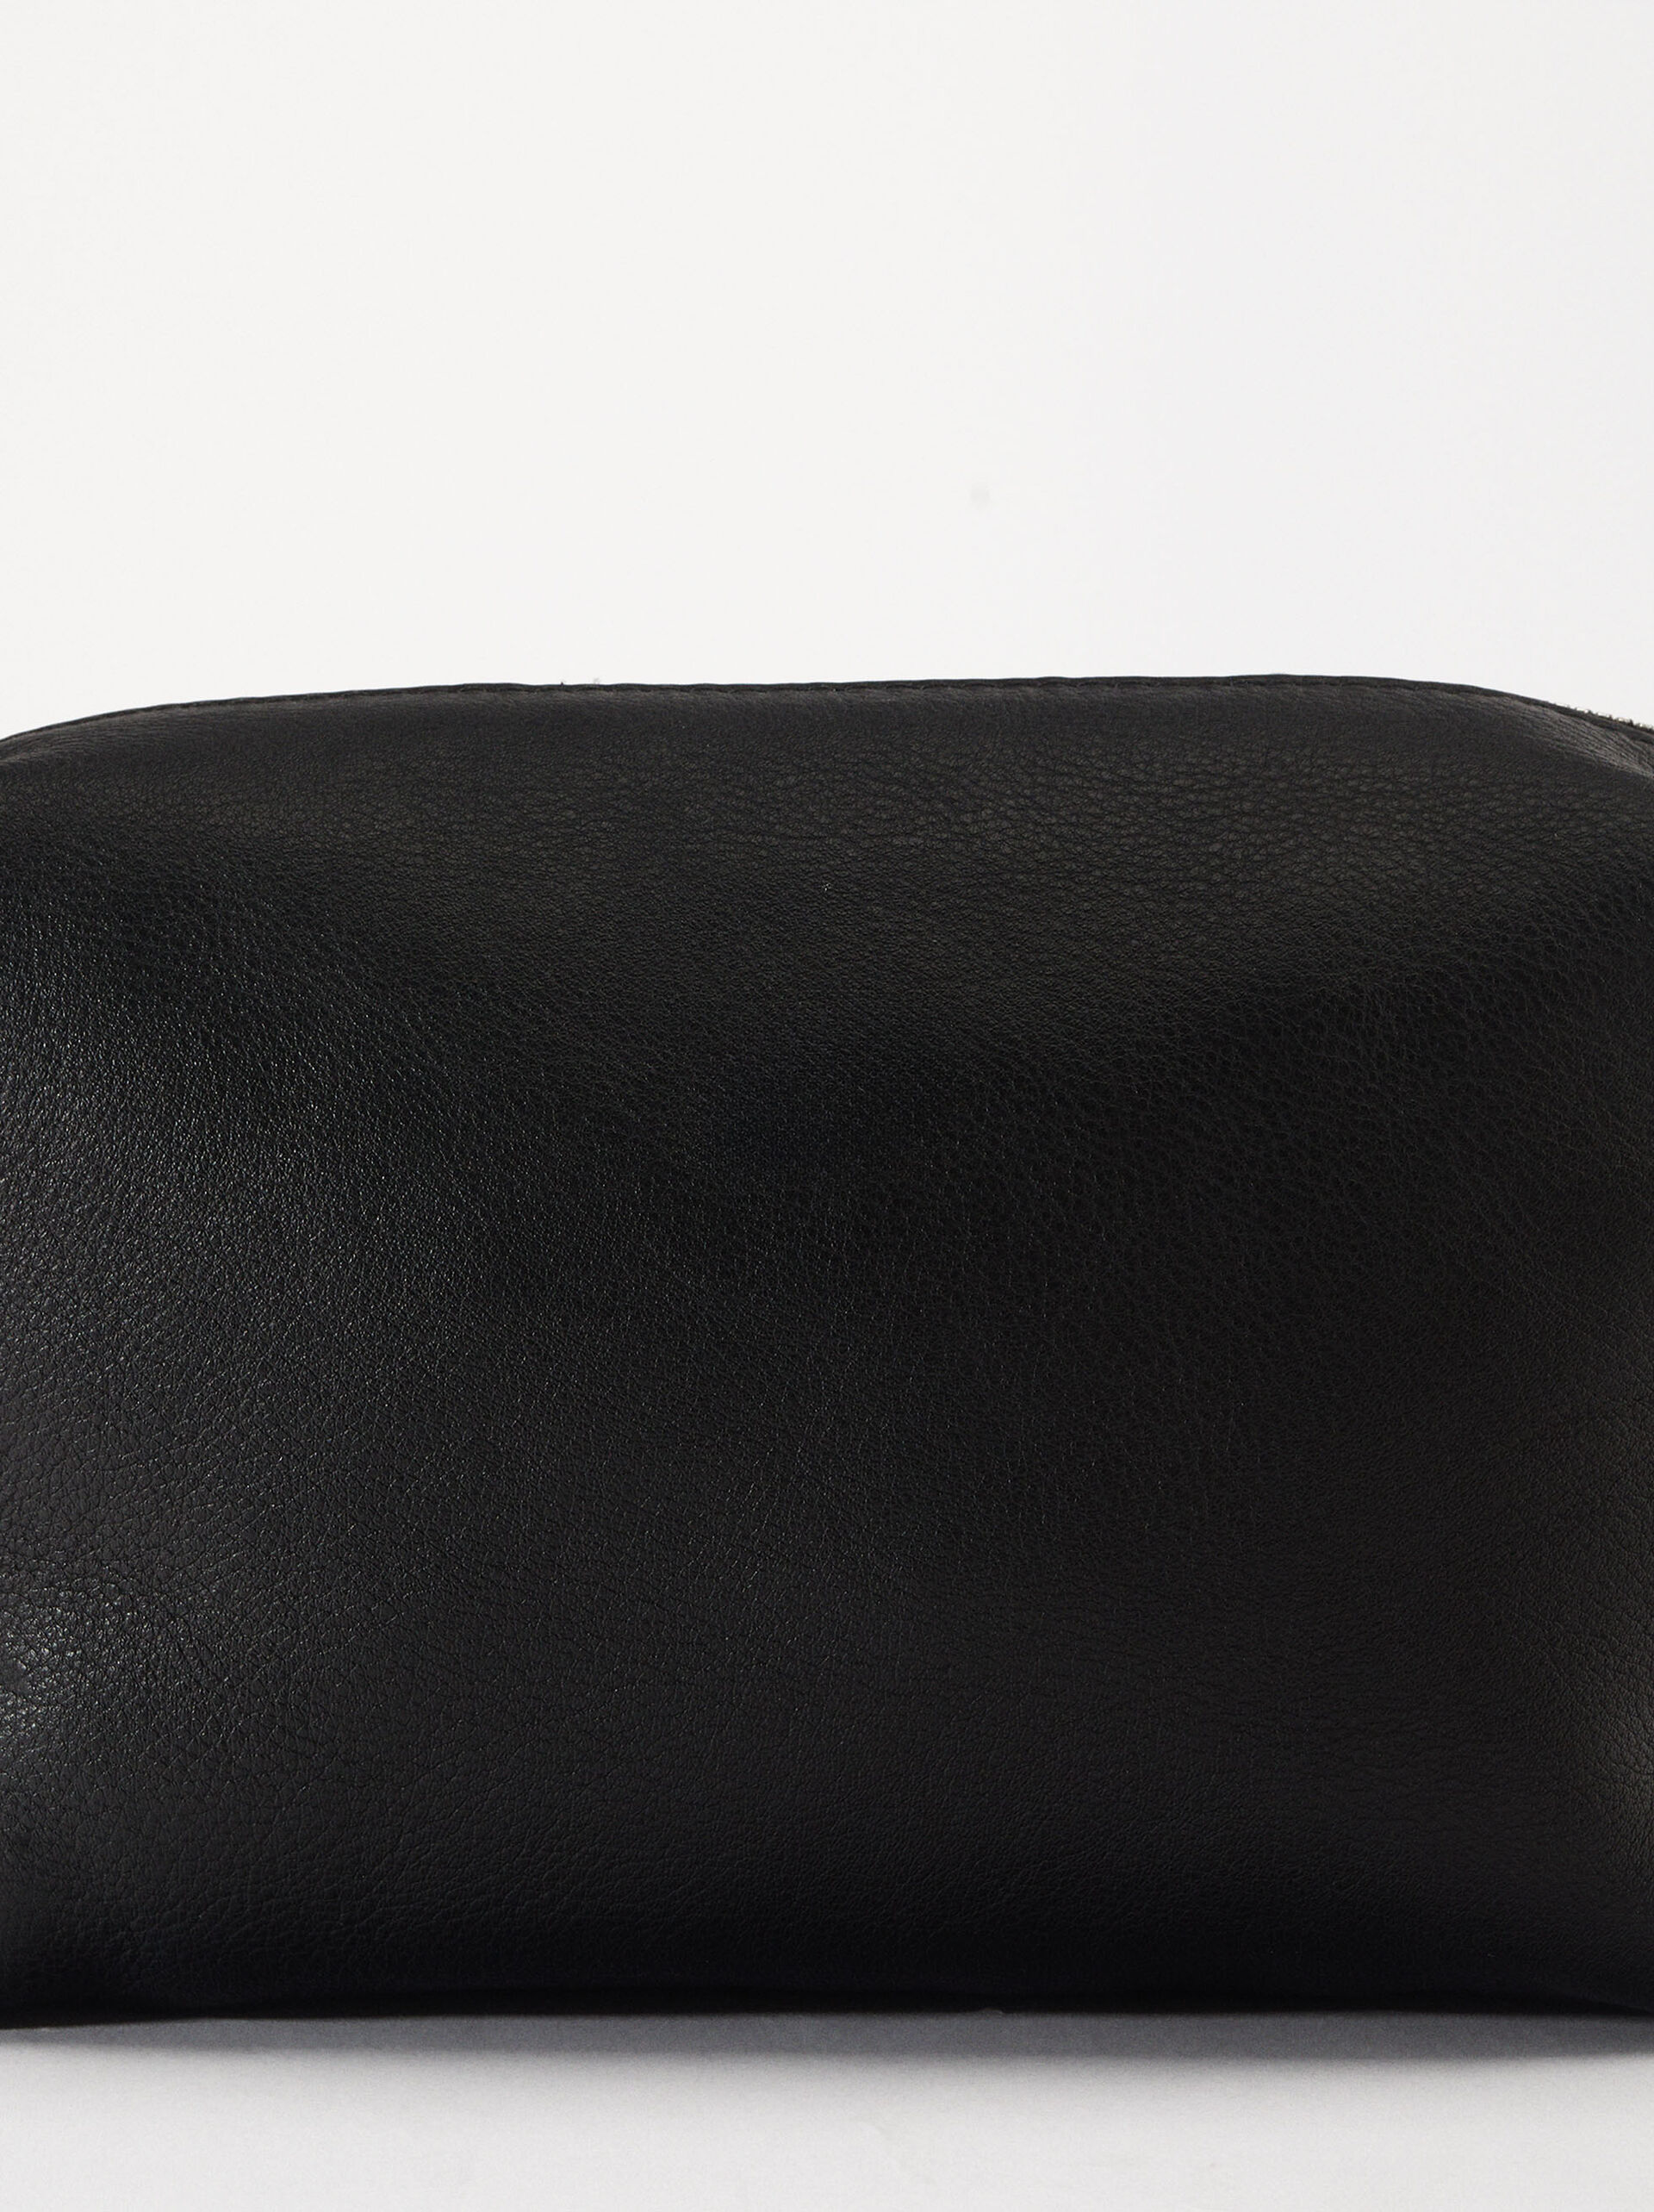 Leather Crossbag image number 4.0